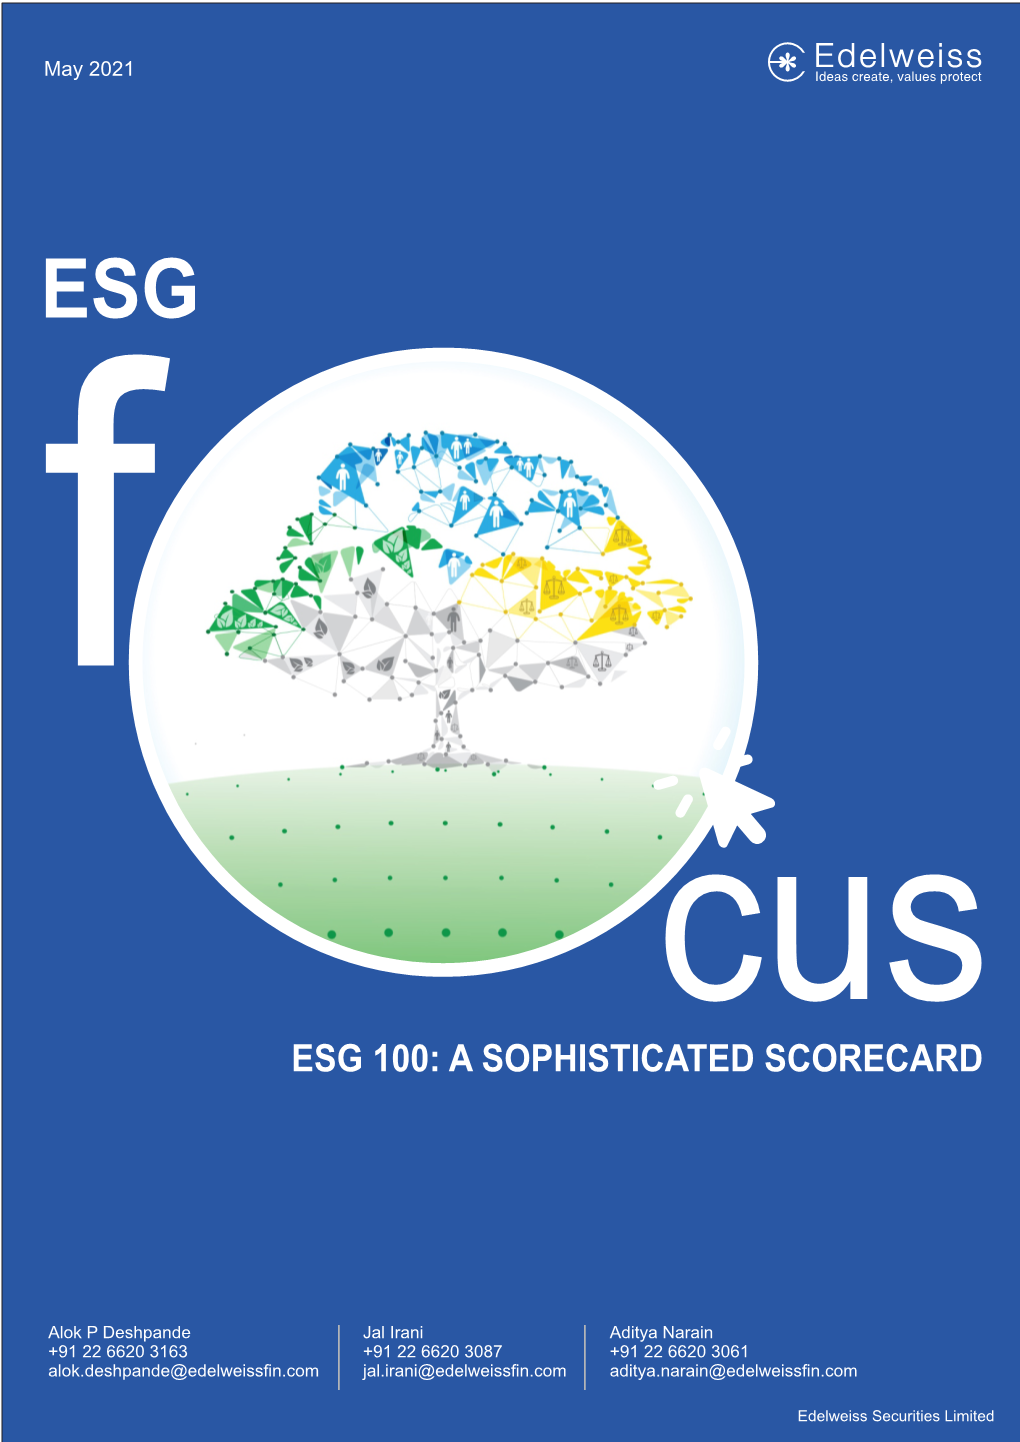 Launching Edelweiss ESG Scorecard